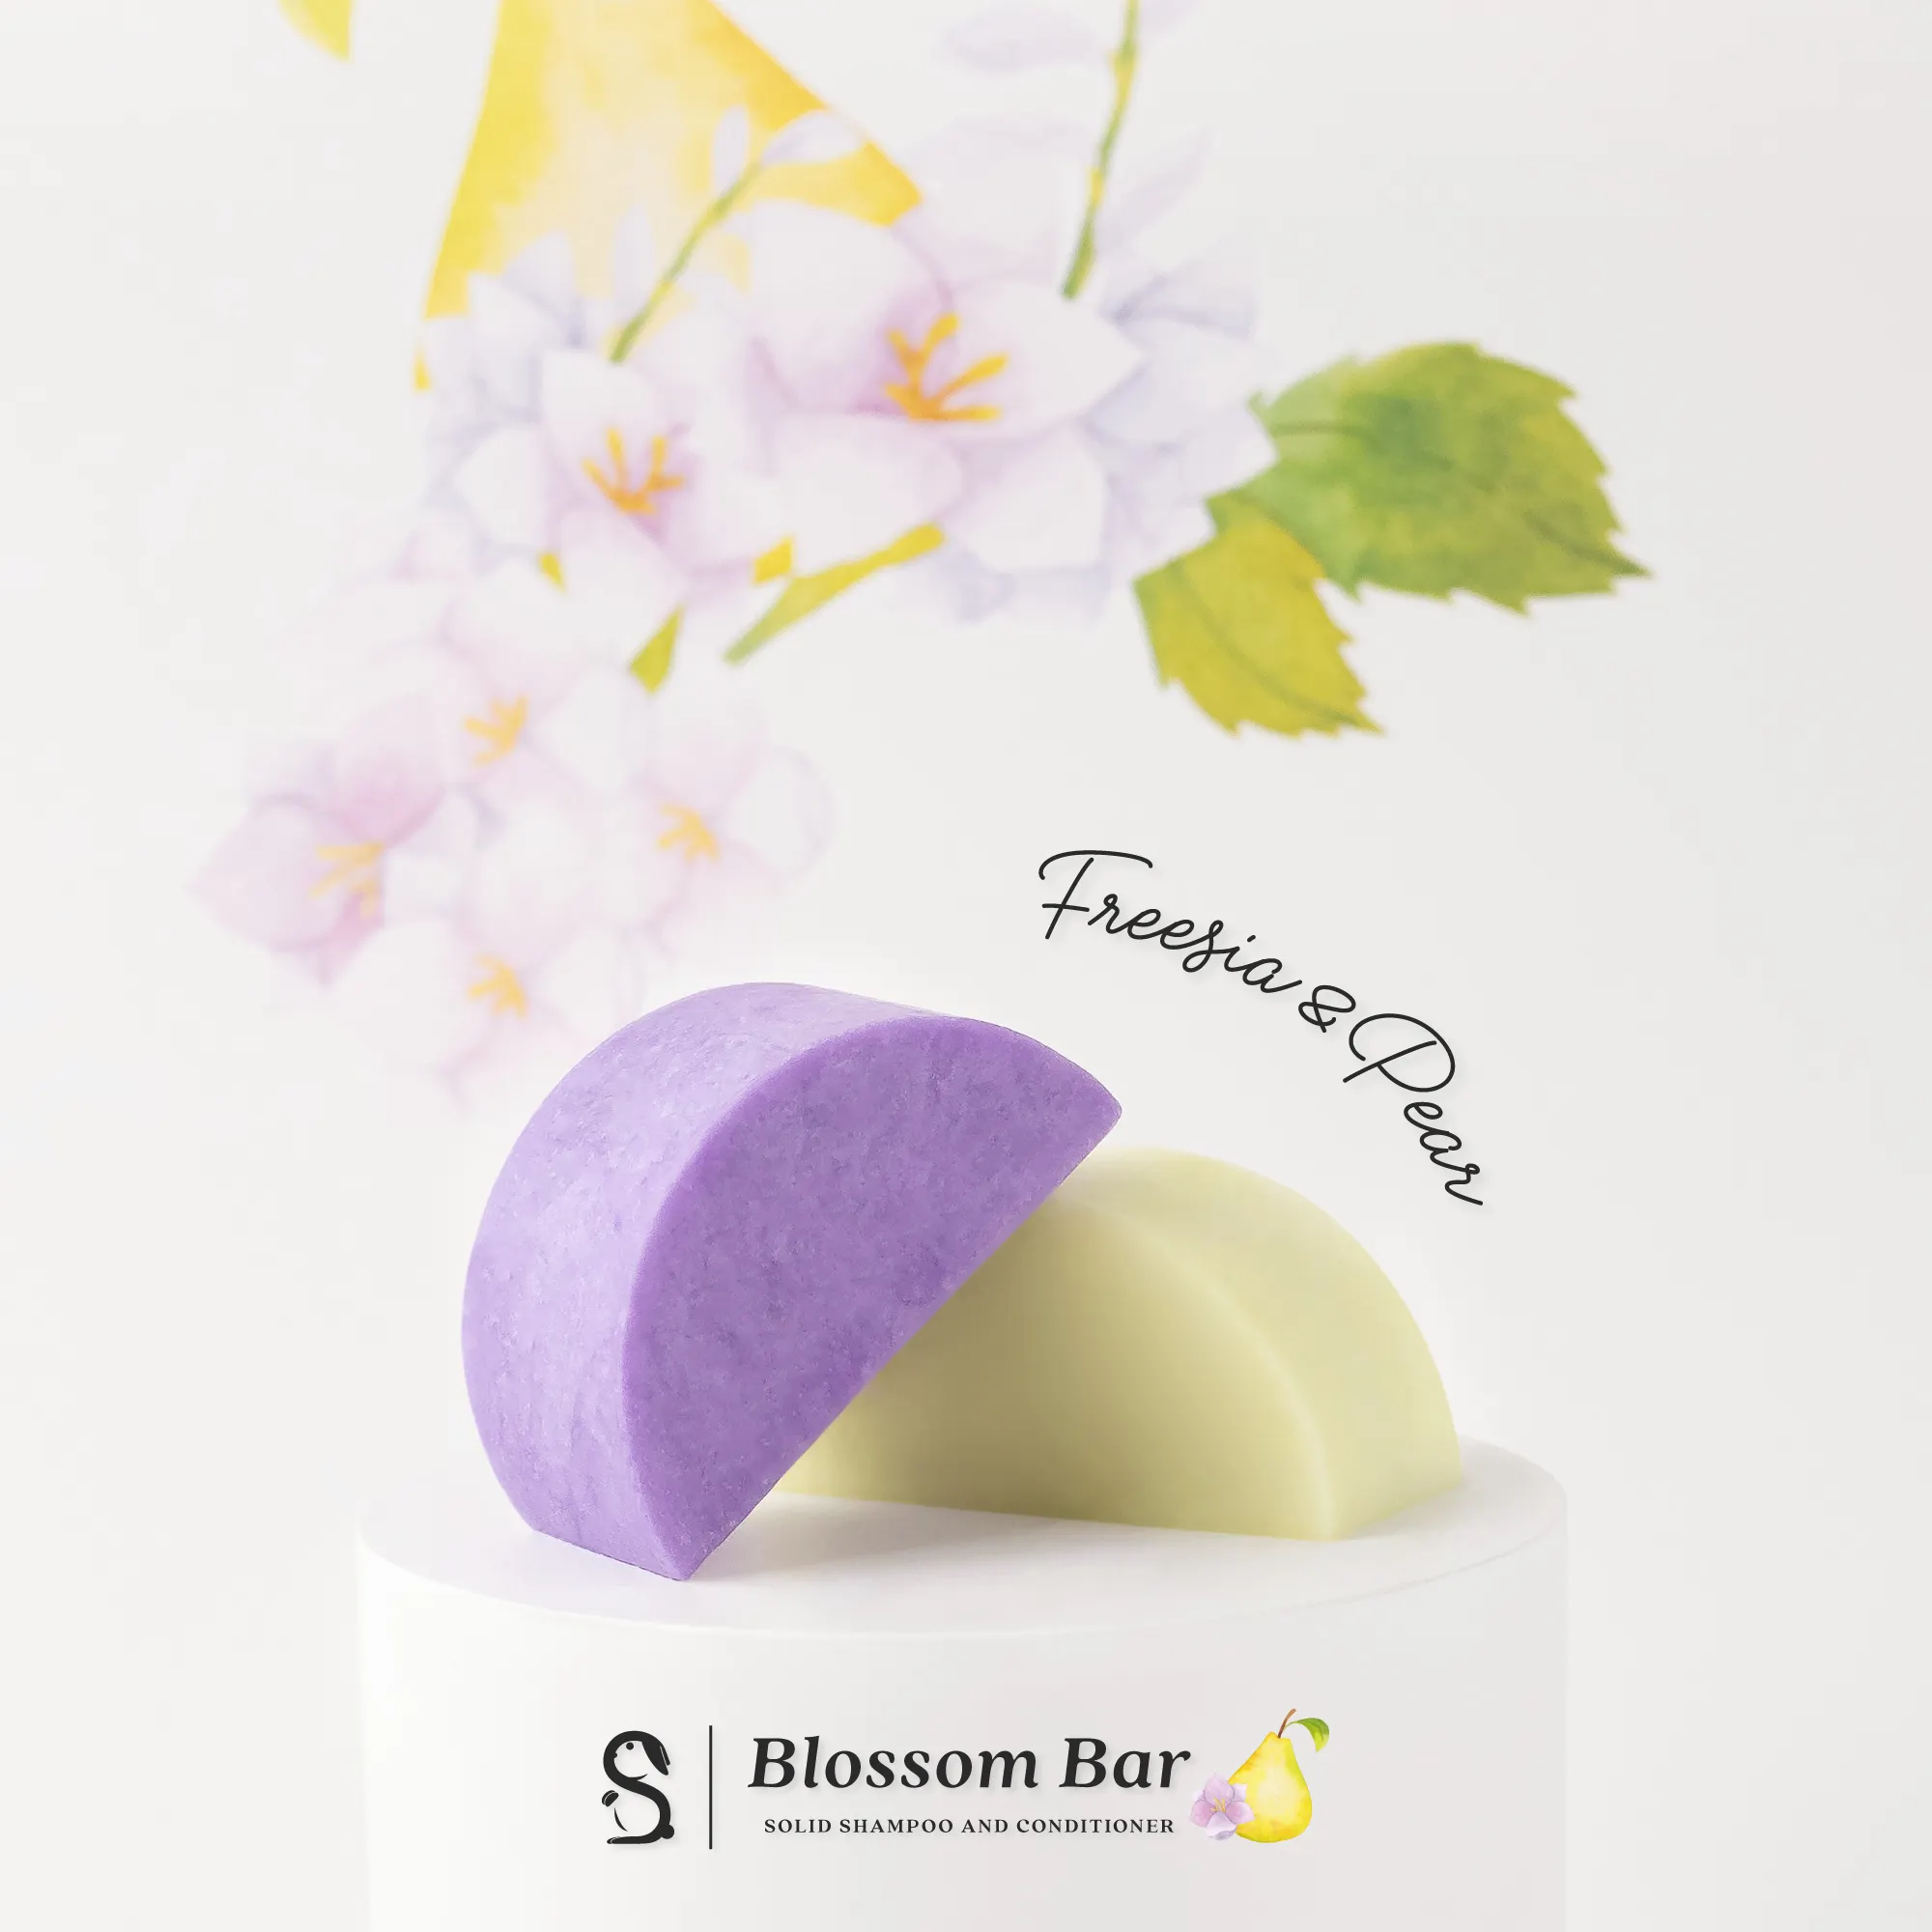 Shampoo & Conditioner Bar Freesia & Pear Scent 2.3 oz. Premium Shampoo Hair Care Product From Thailand